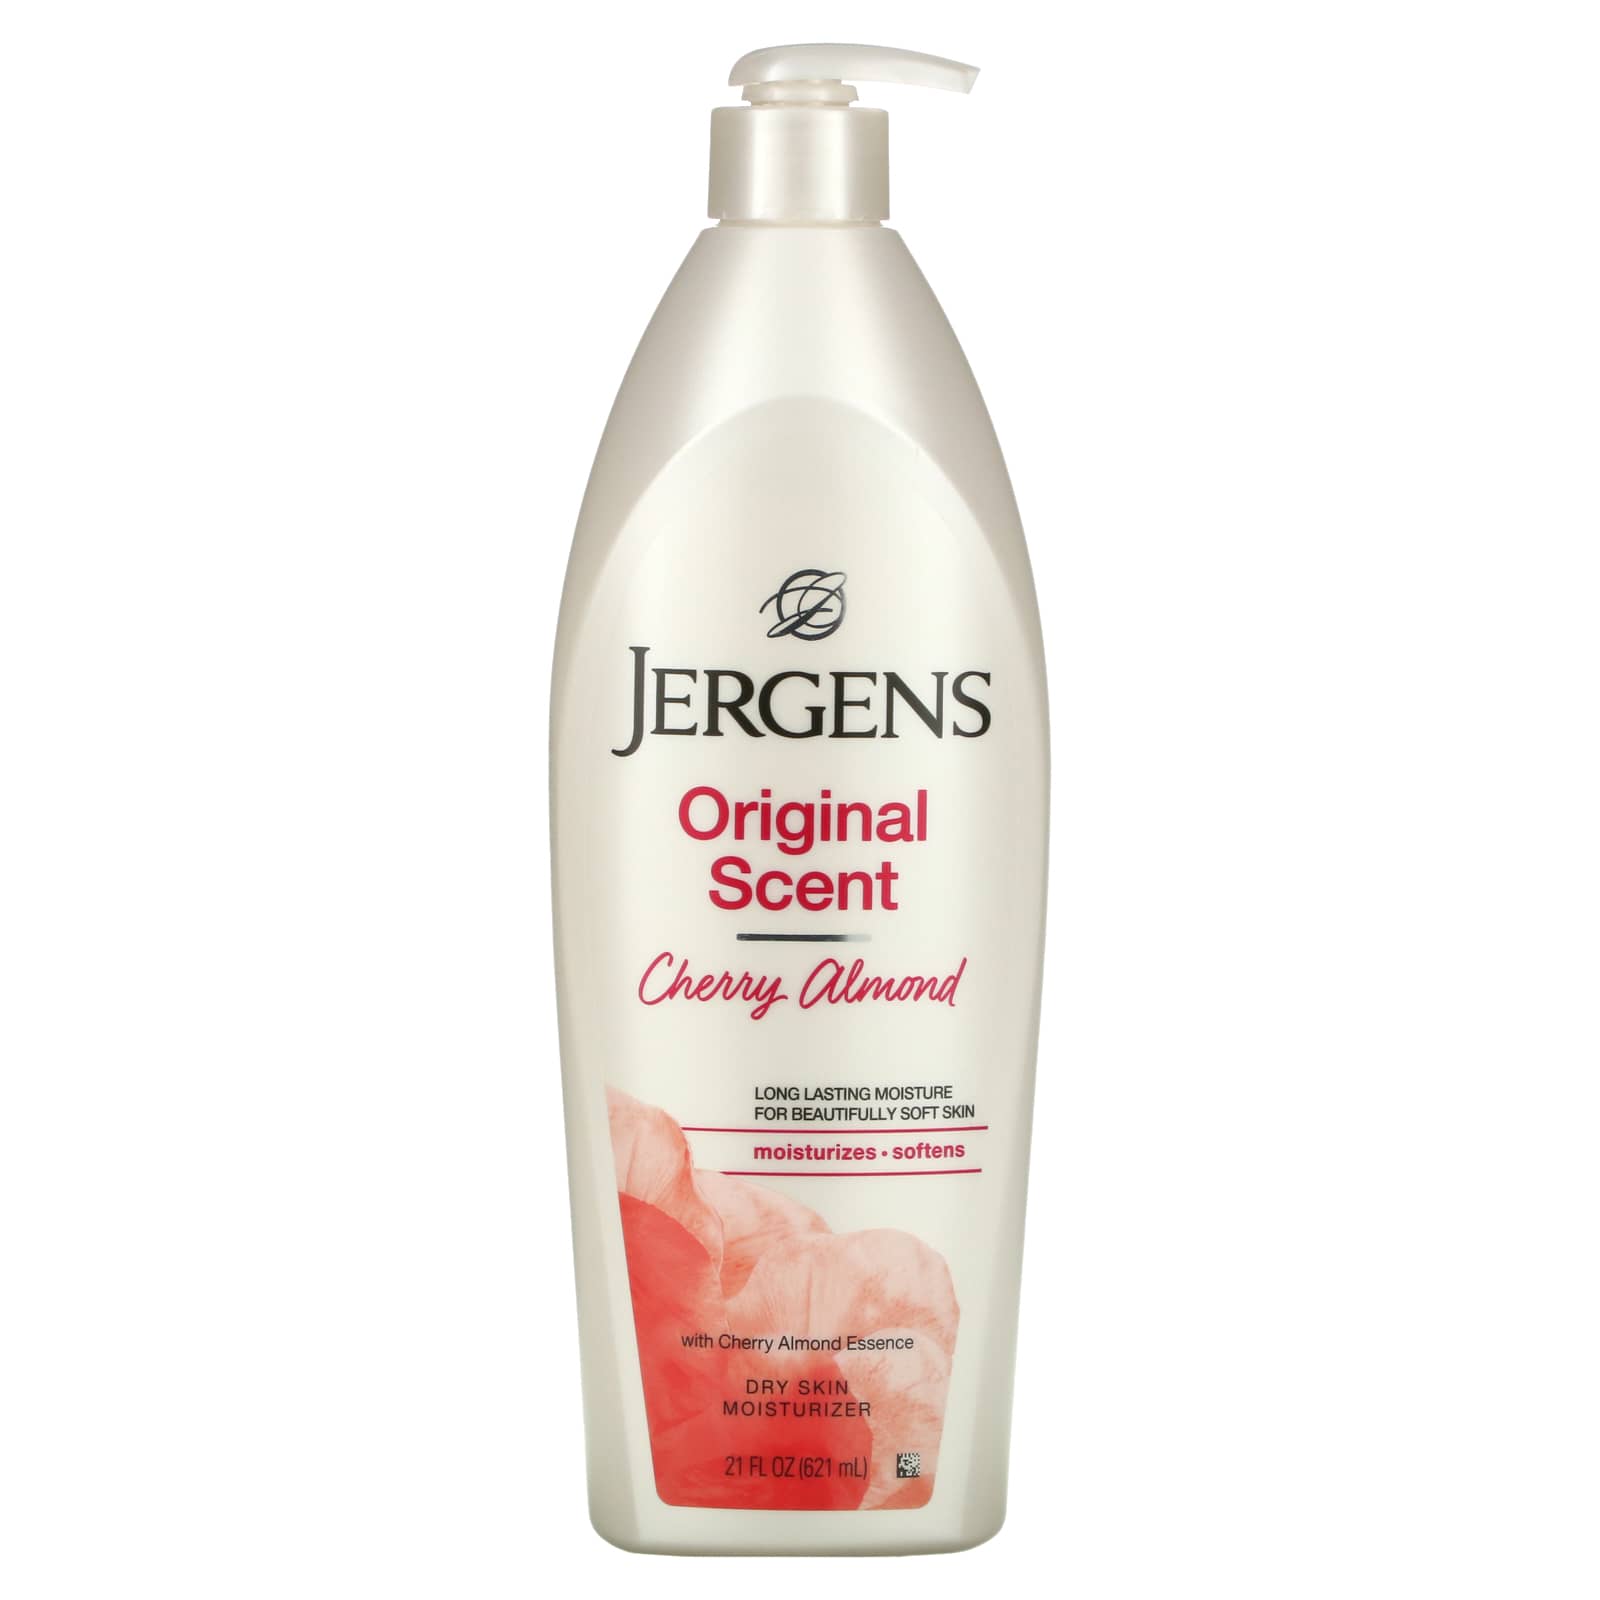 JERGENS Original Scent Dry Skin Moisturizer, Cherry Almond, 21oz